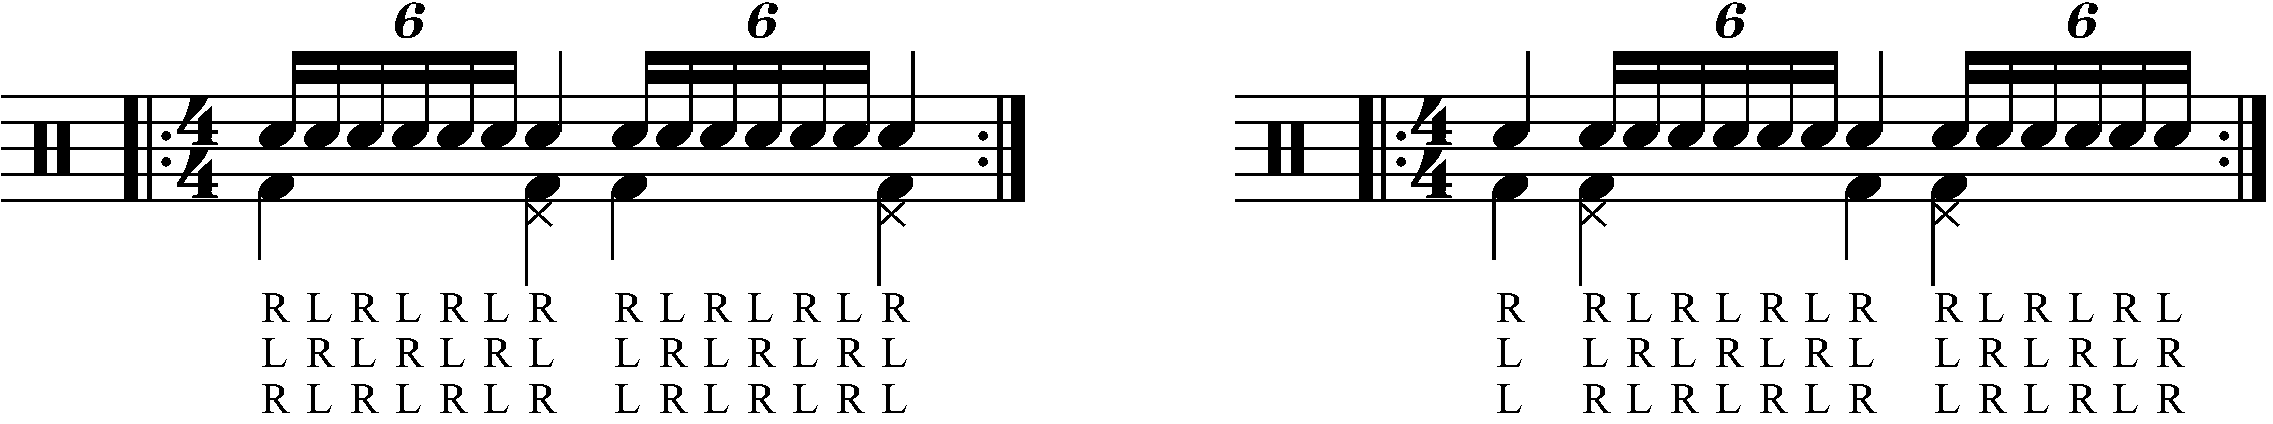 Adding quarter note feet under a single stroke 7